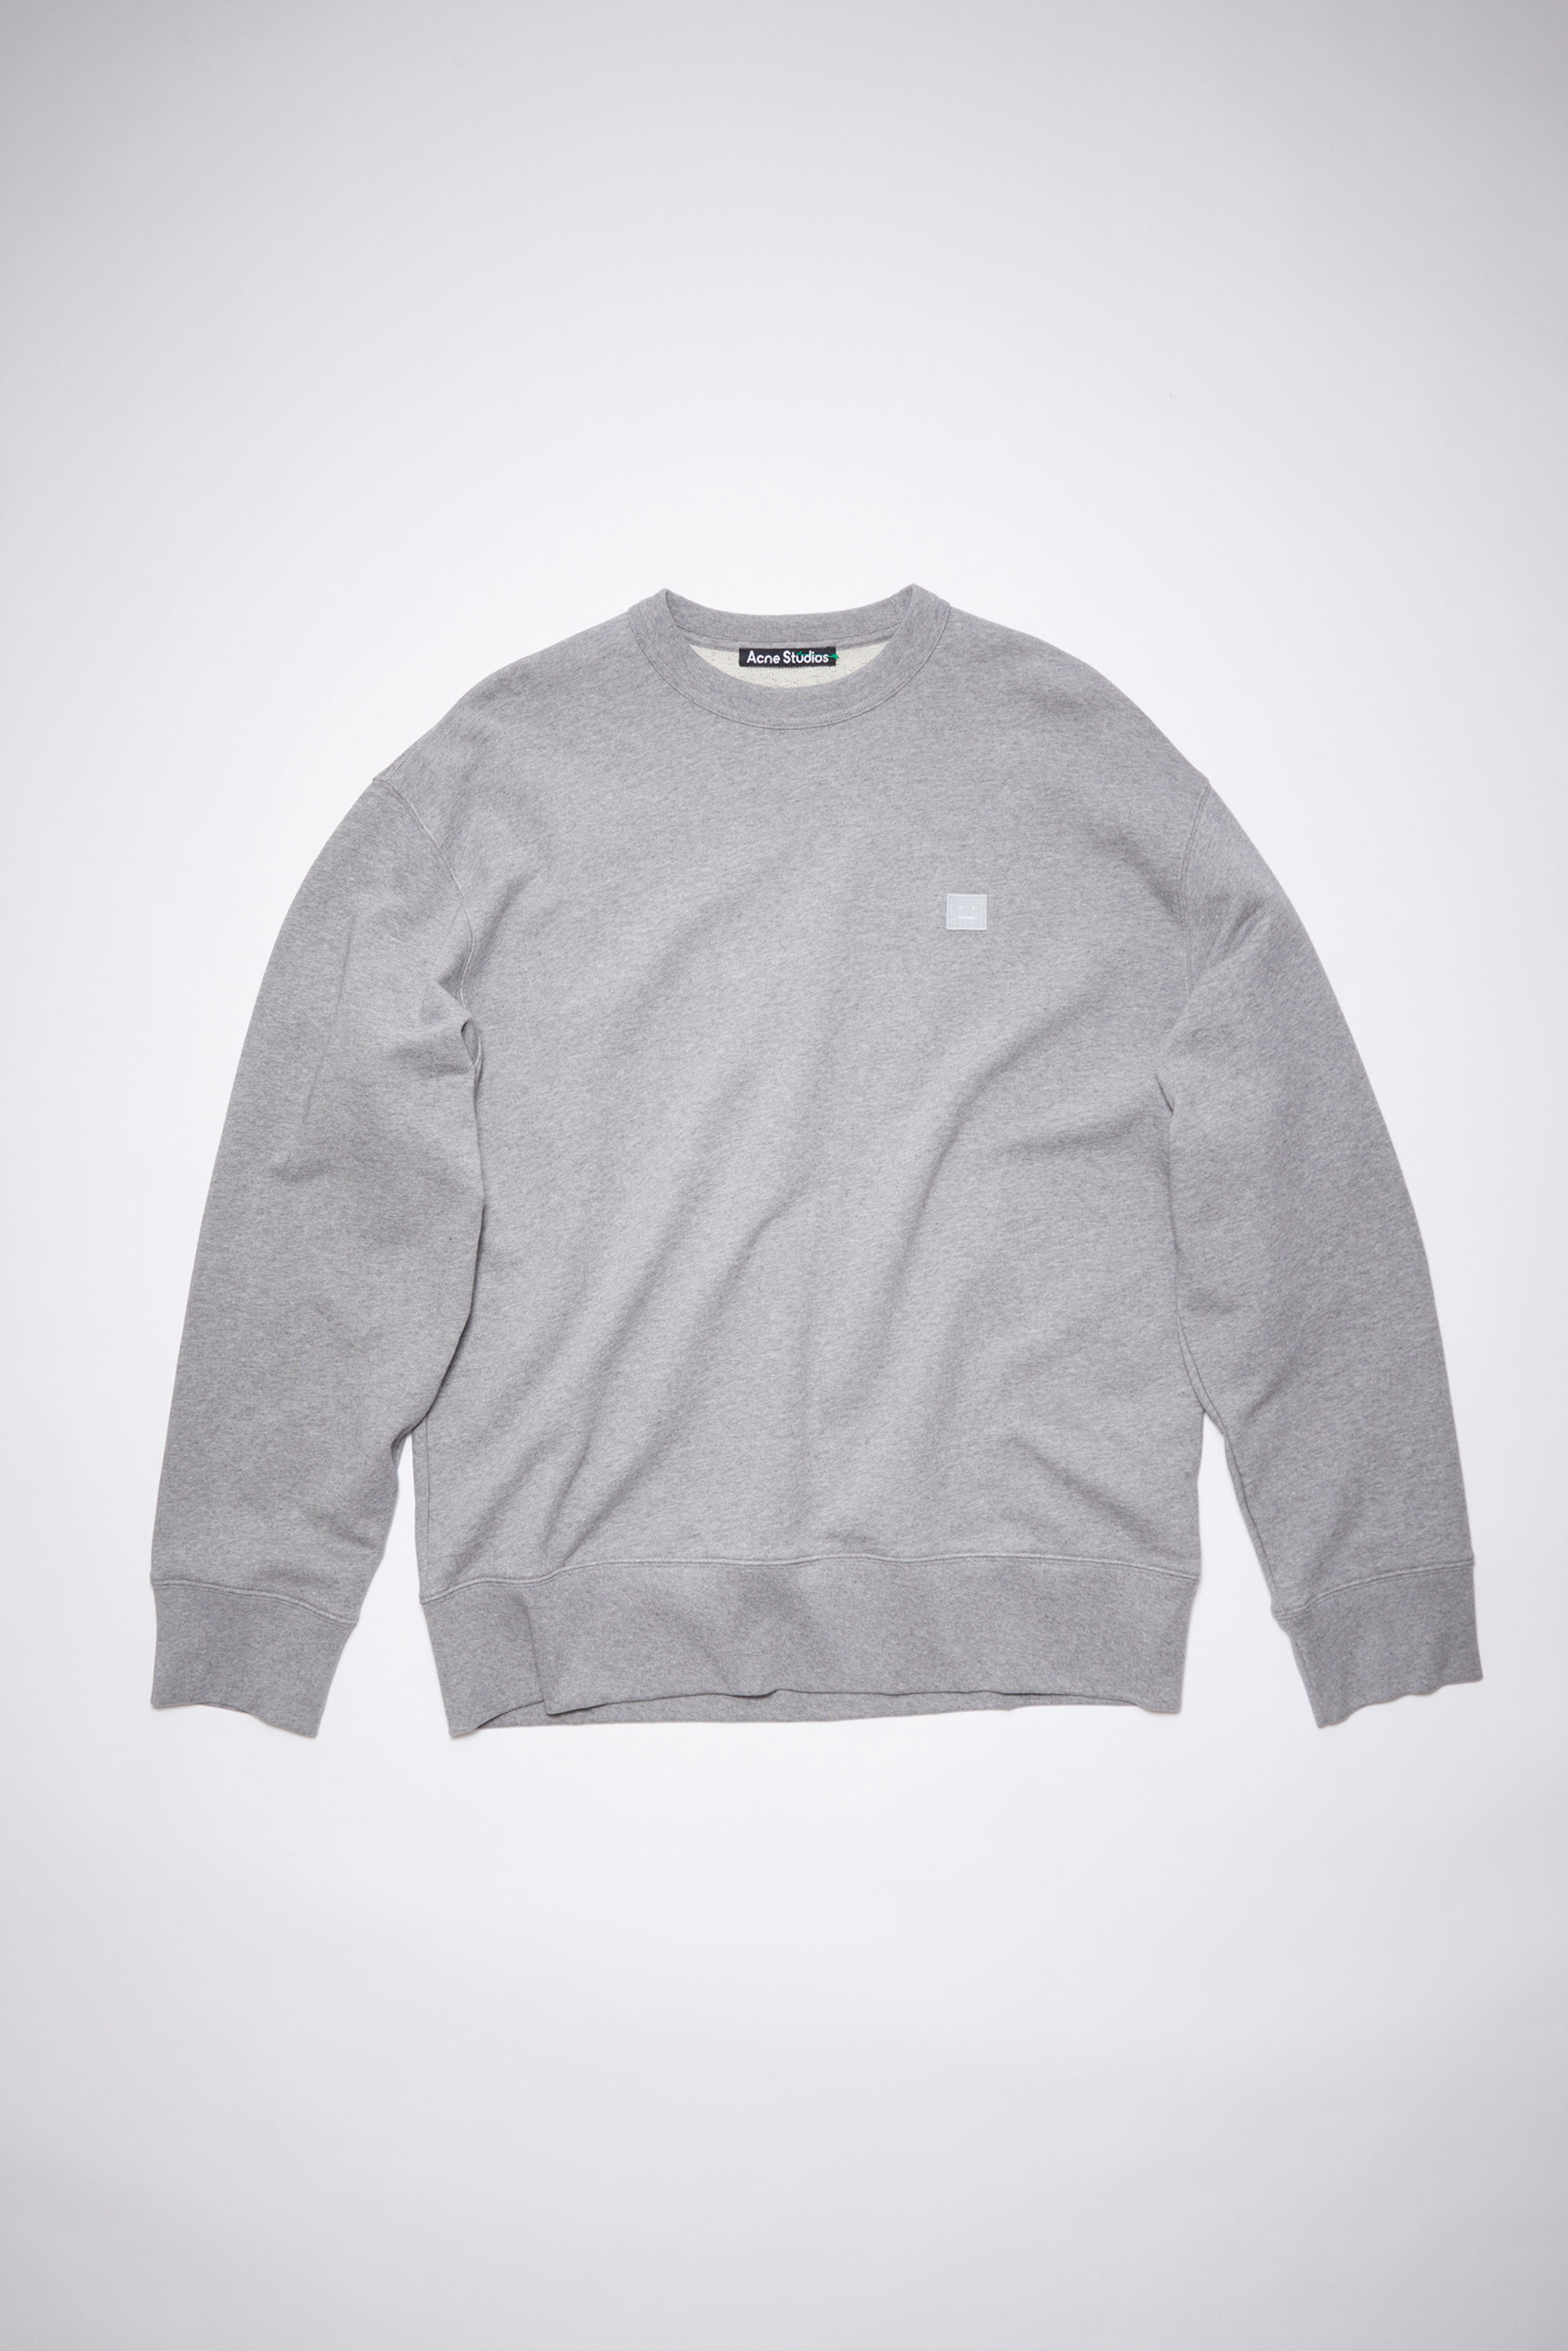 Acne Studios - Crew neck sweatshirt - Relaxed fit - Light Grey Melange